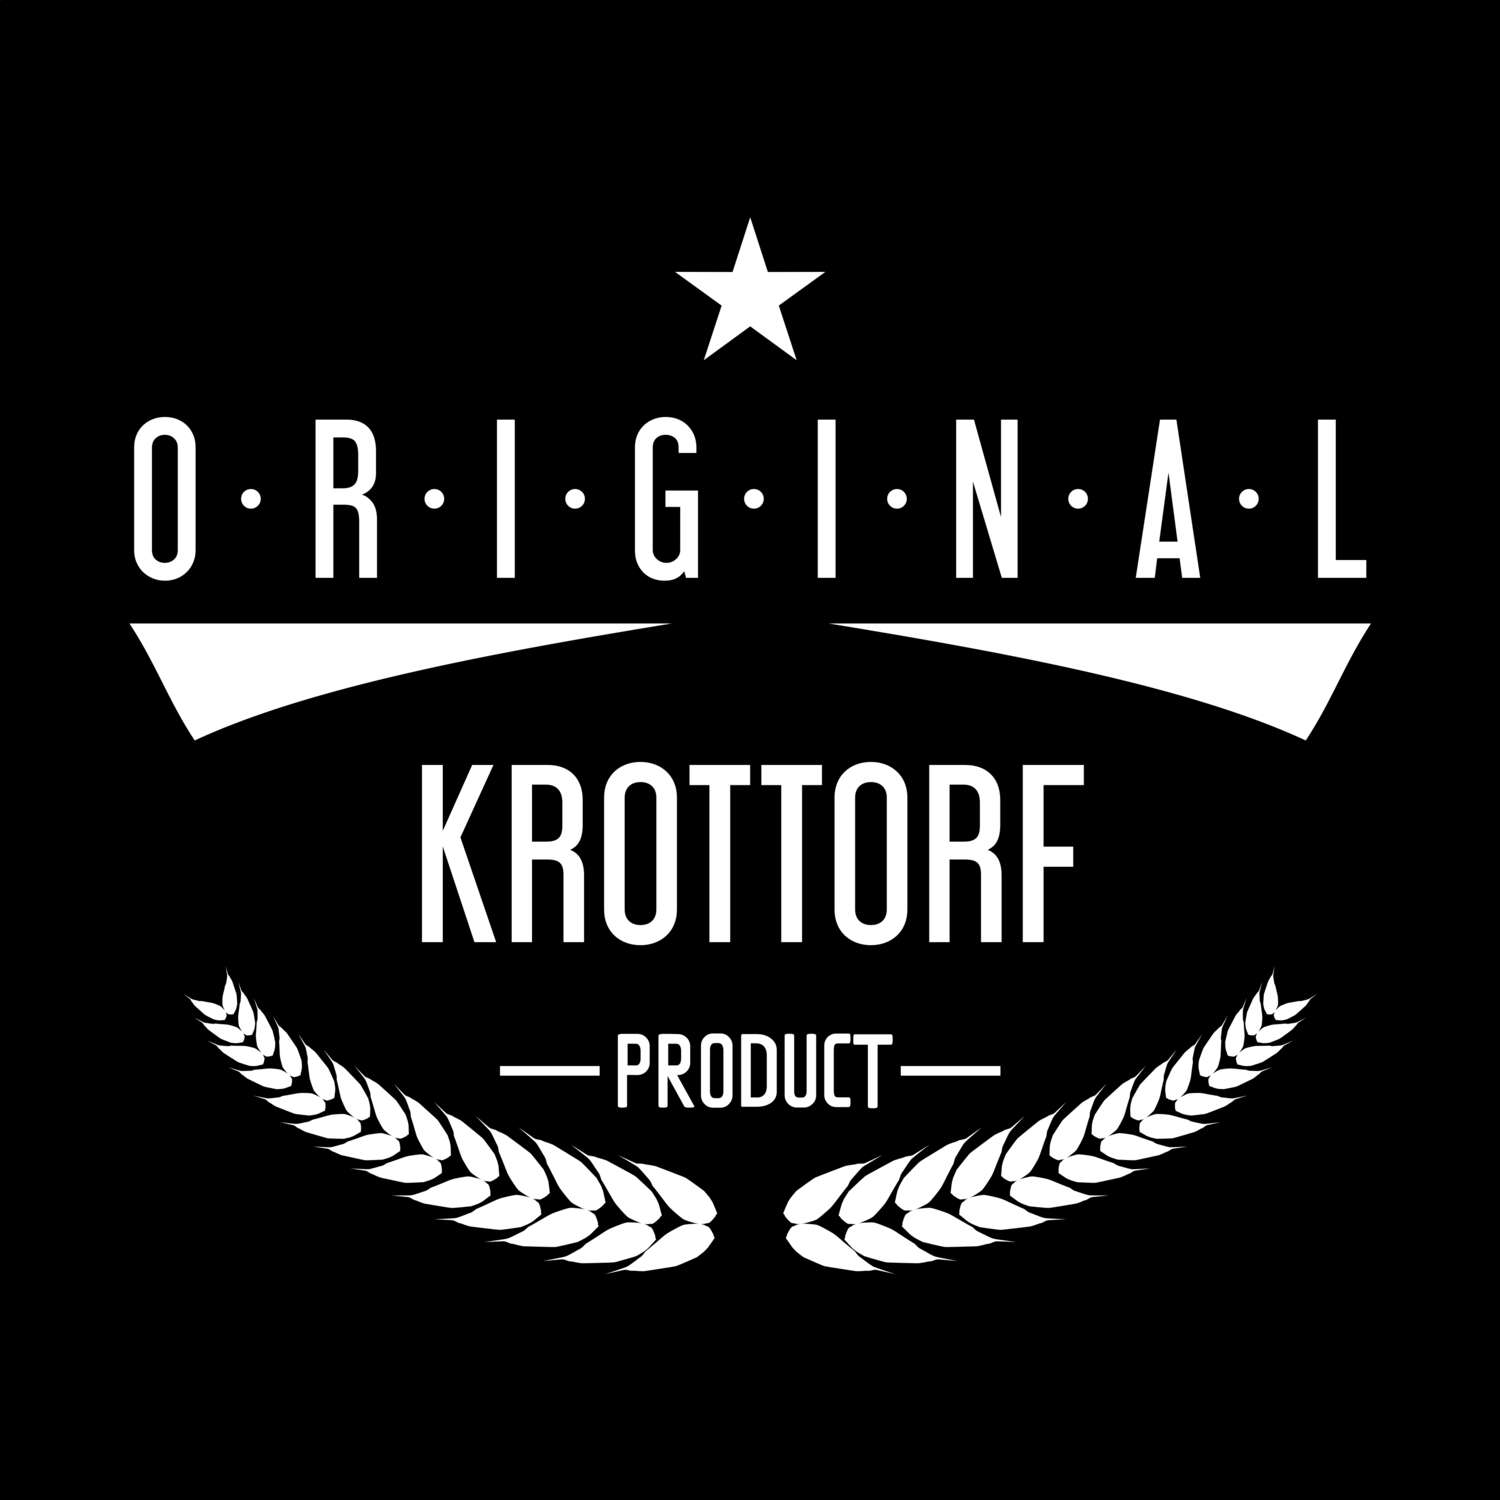 Krottorf T-Shirt »Original Product«